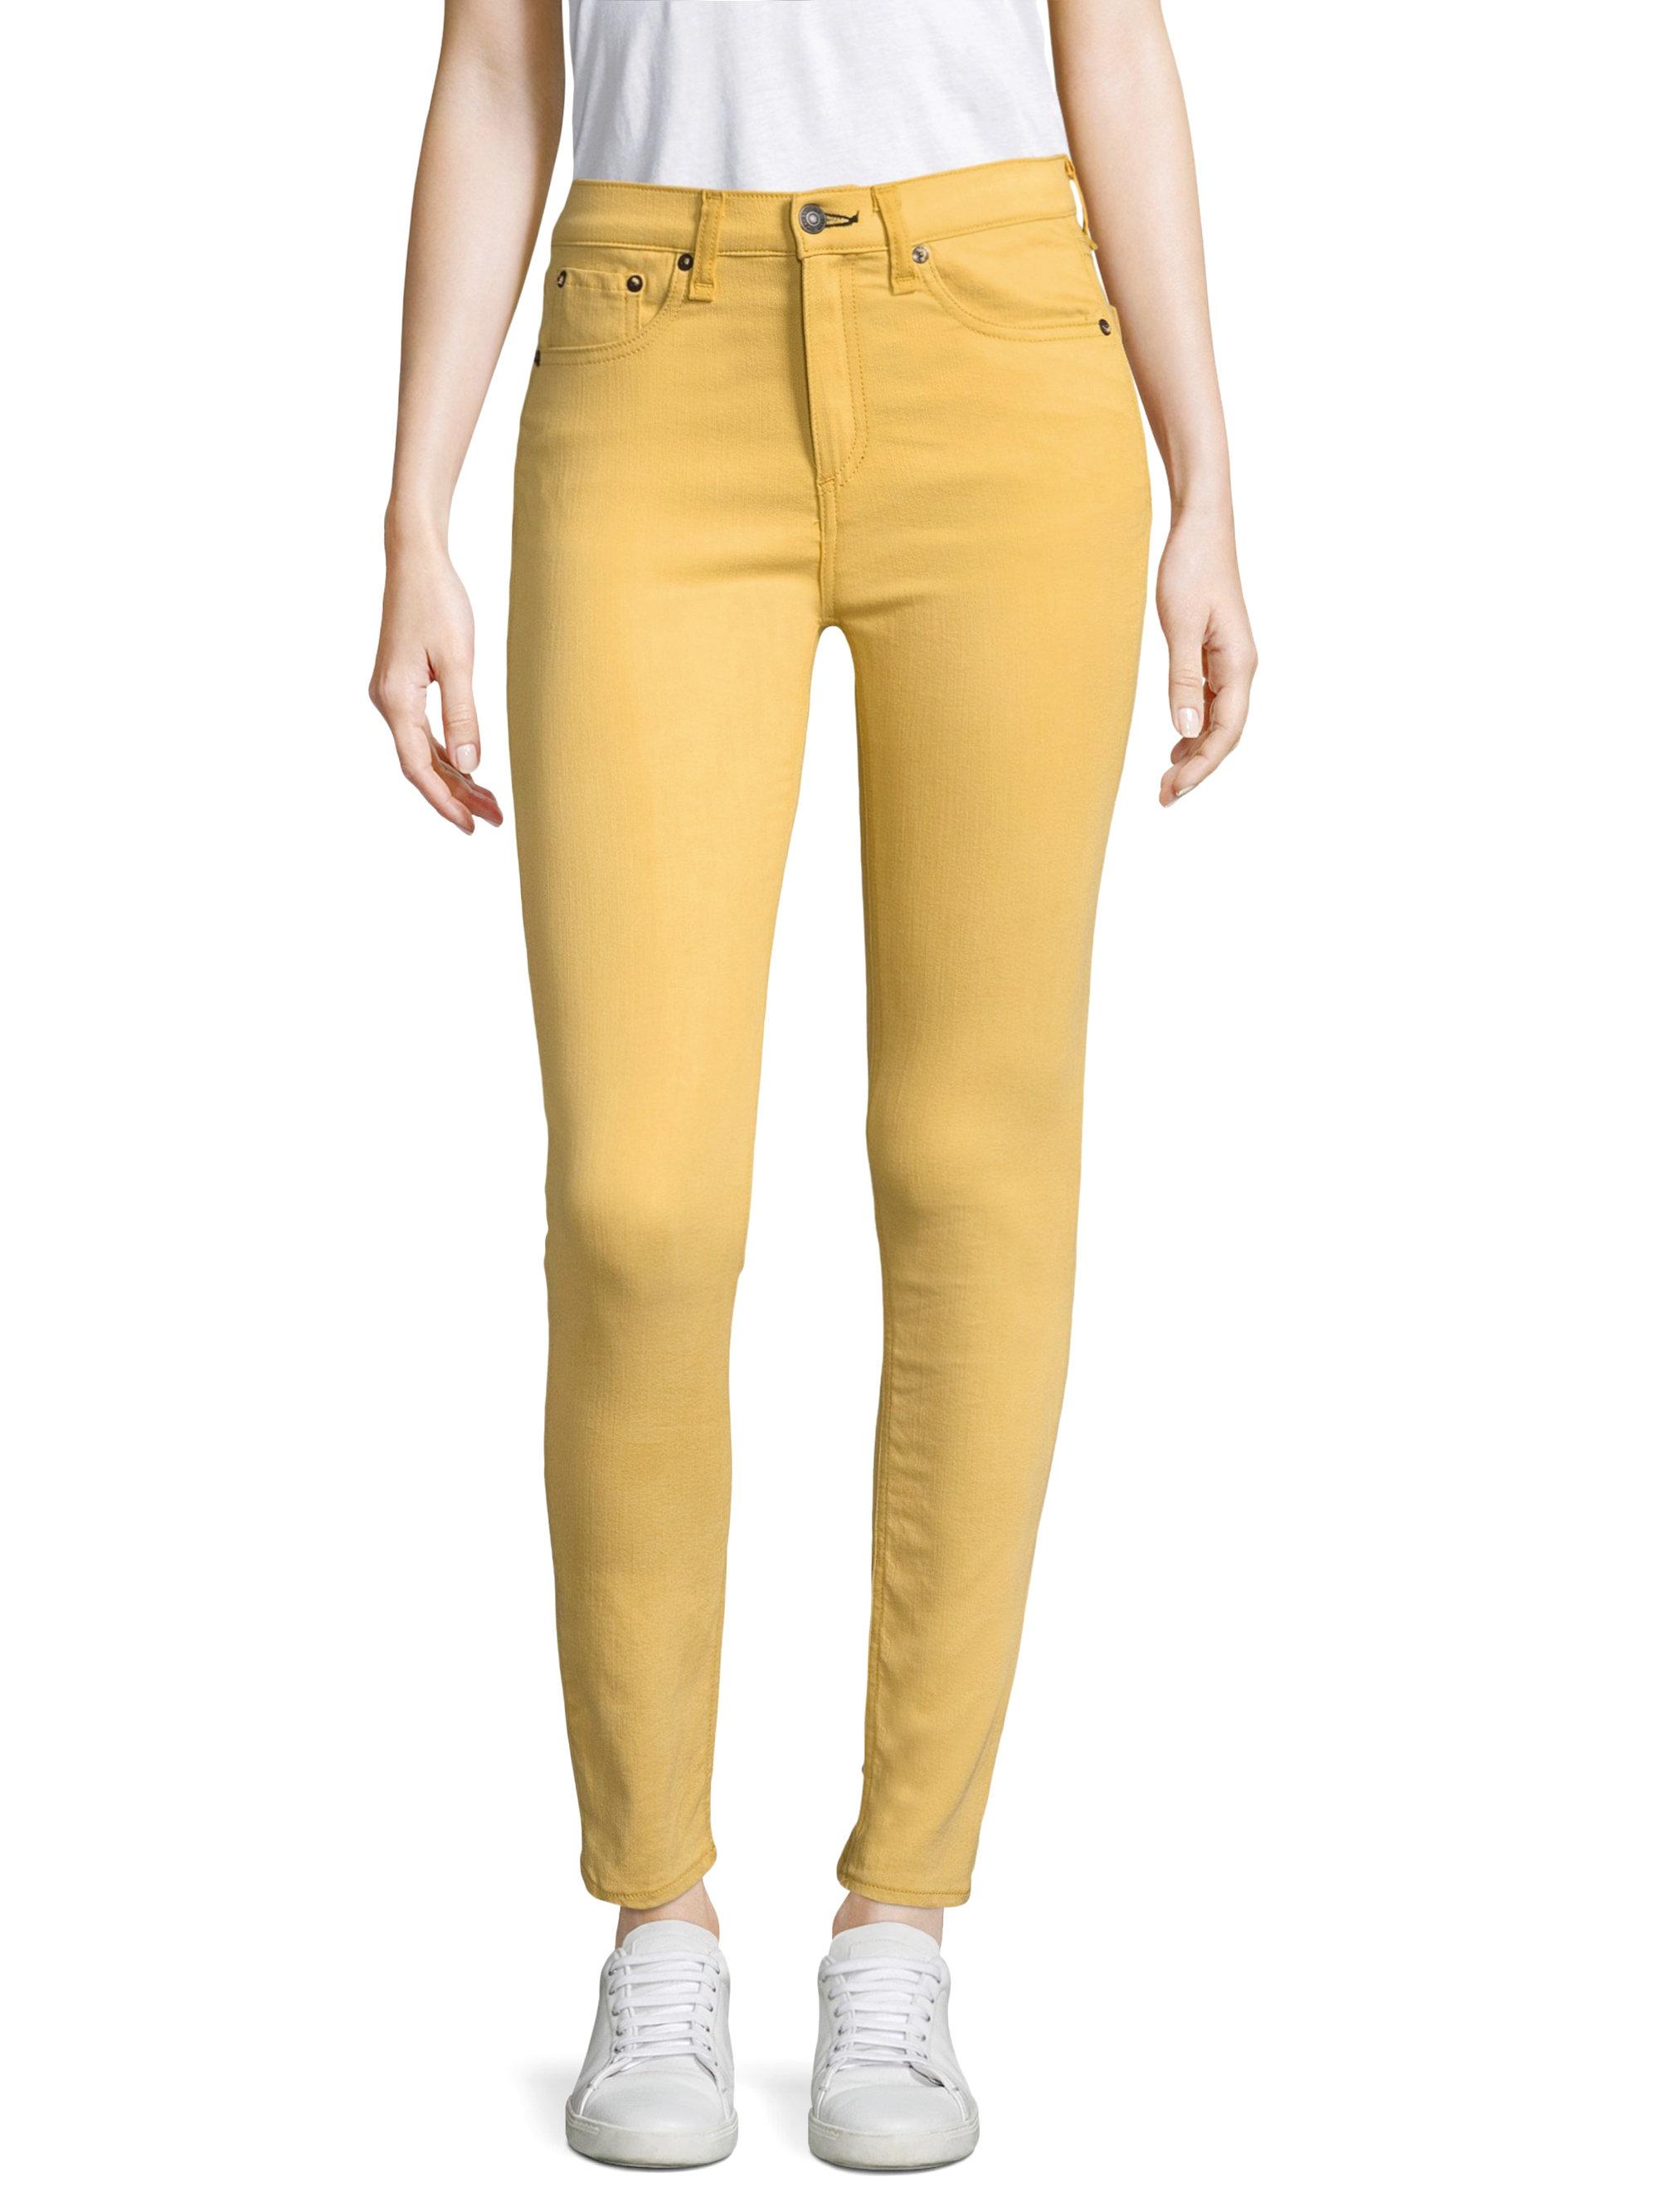 Lyst - Rag & Bone High-rise Skinny Jeans in Yellow